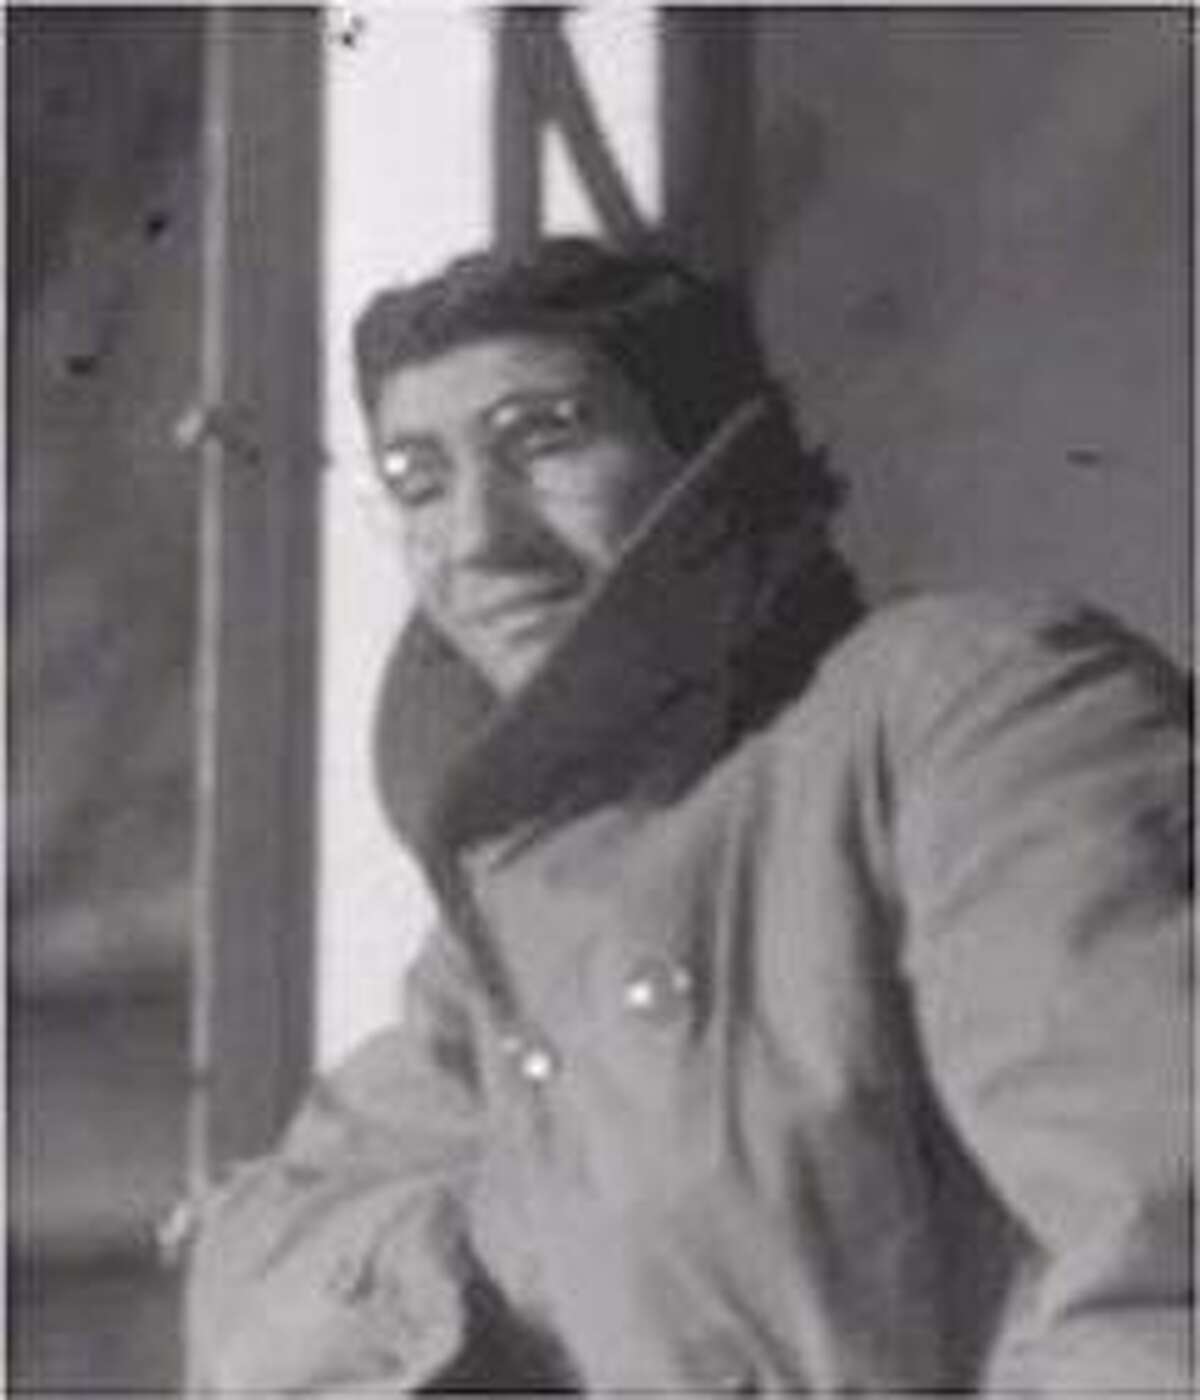 Obituary photo of Leo Krikorian. Photograph by Felix T. Krowinski, � Black Mountain College Project.